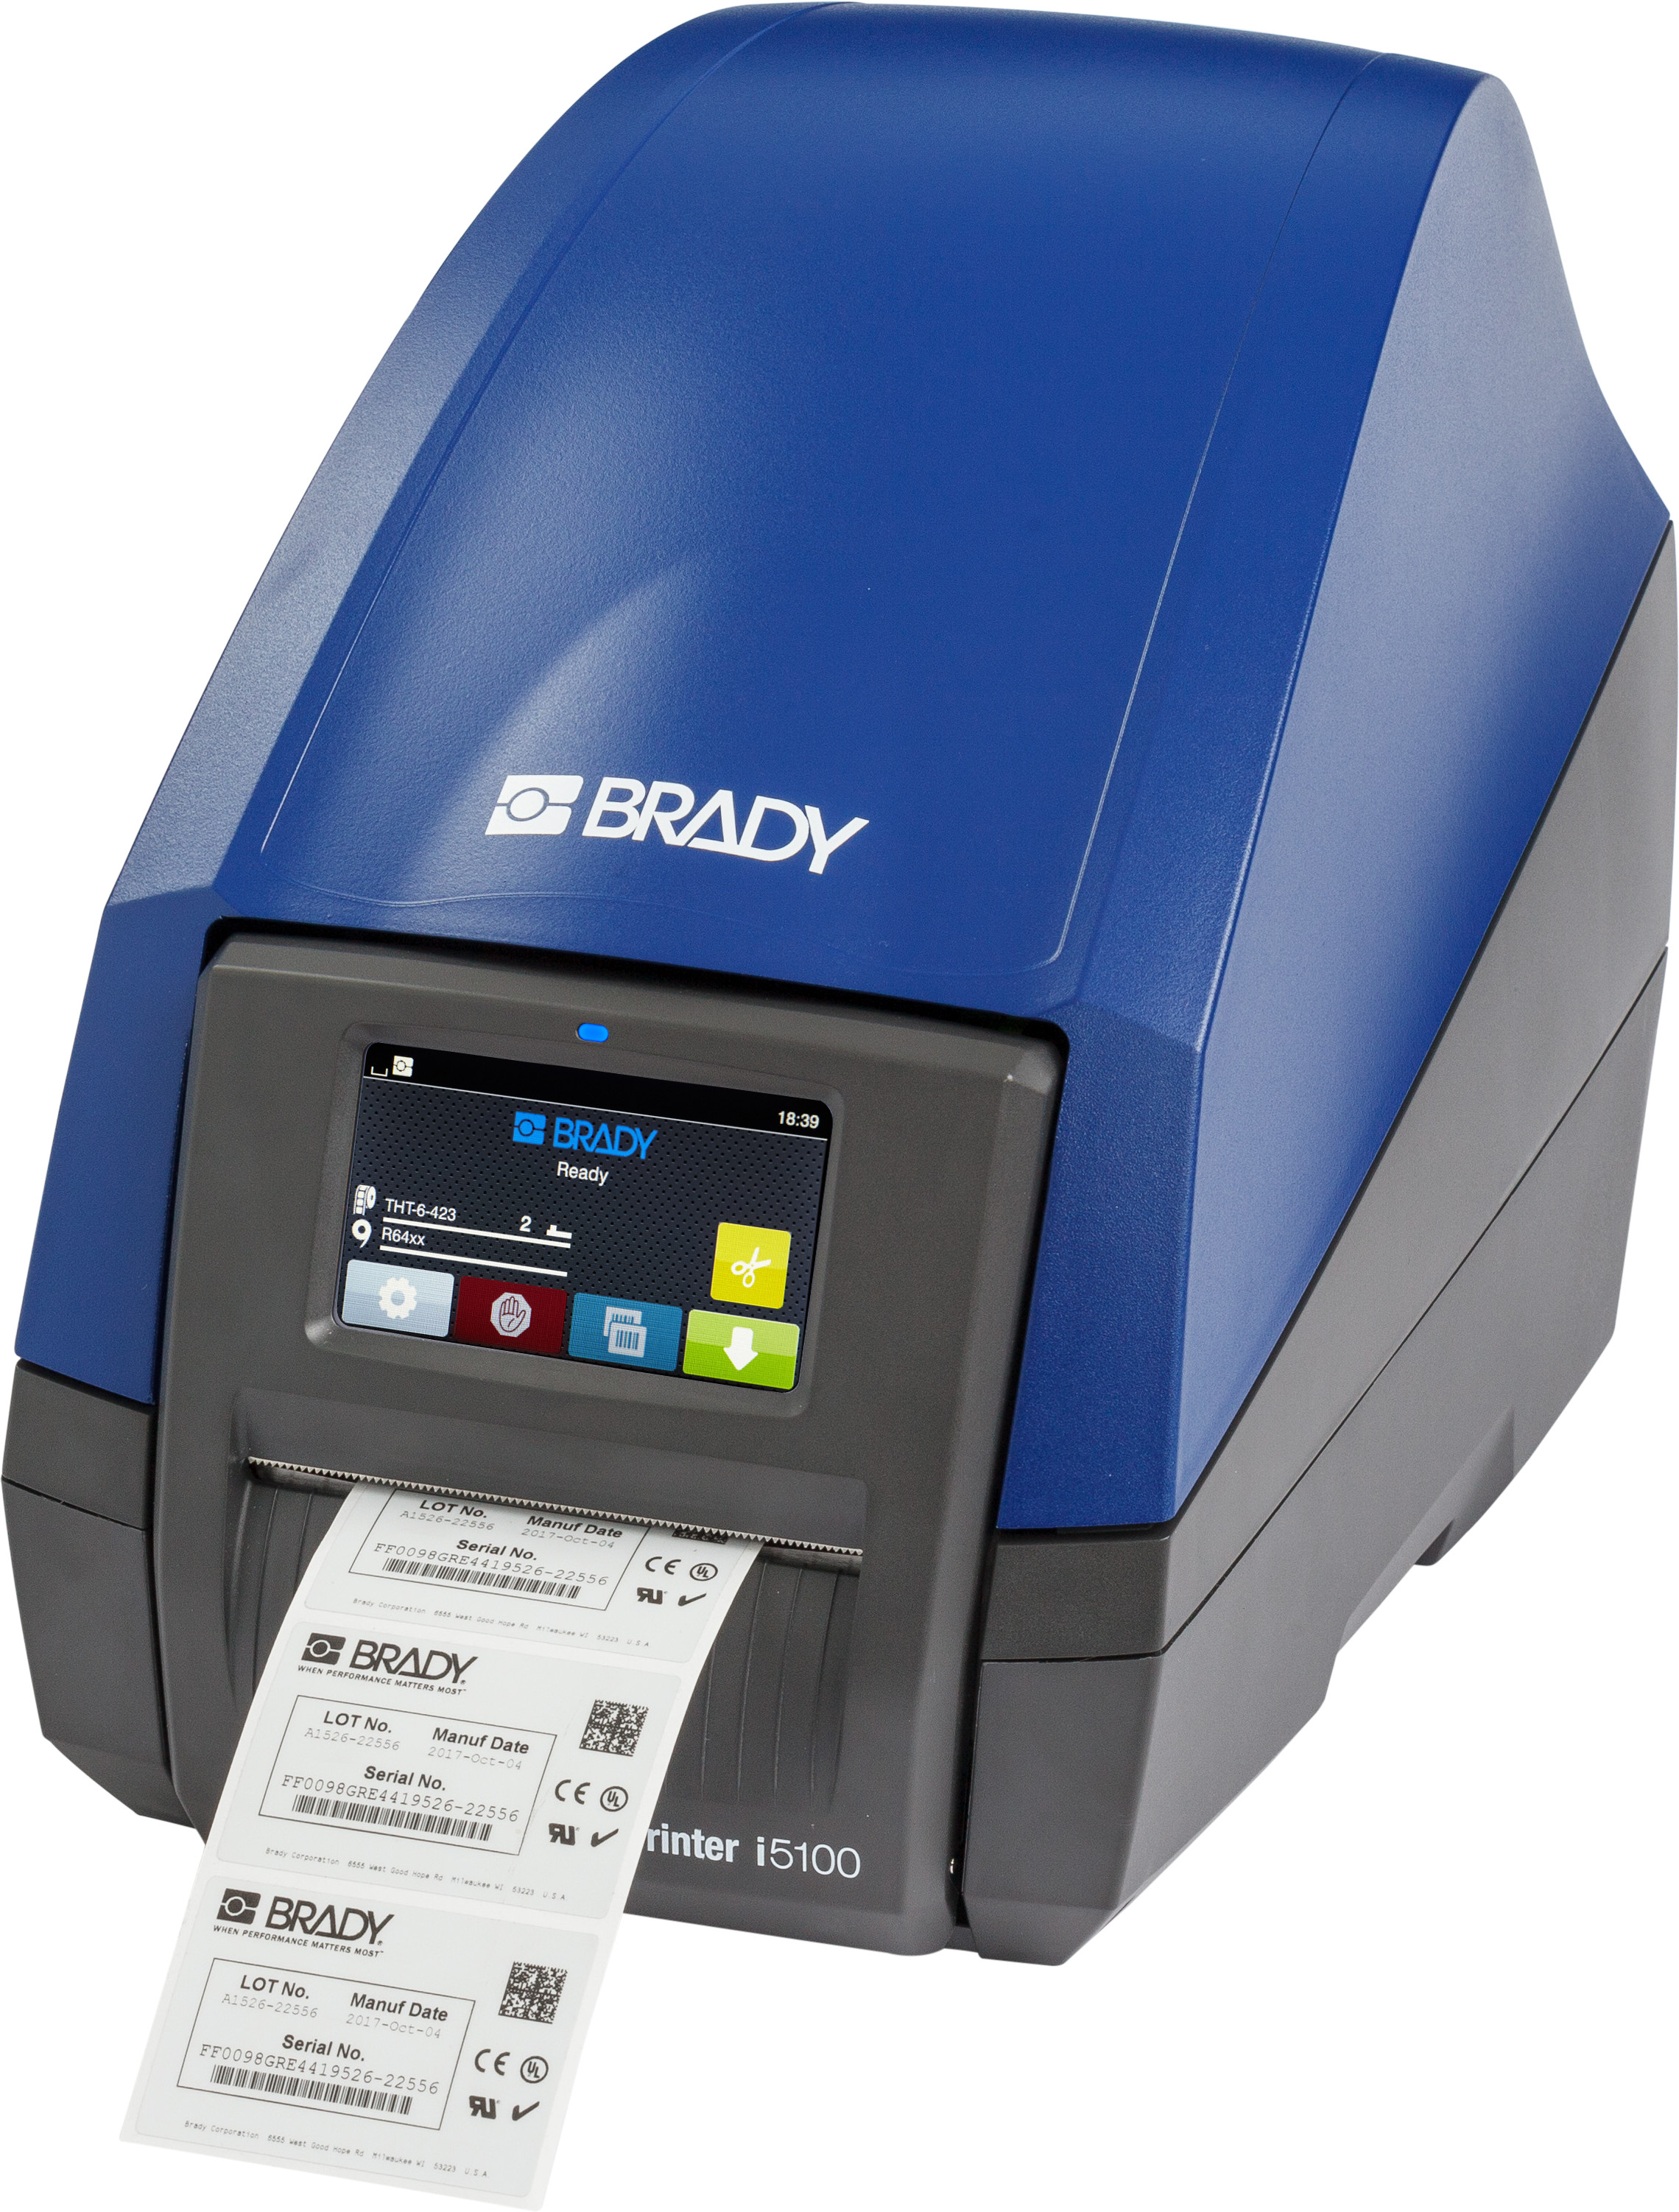 BRADY BradyPrinter i5100